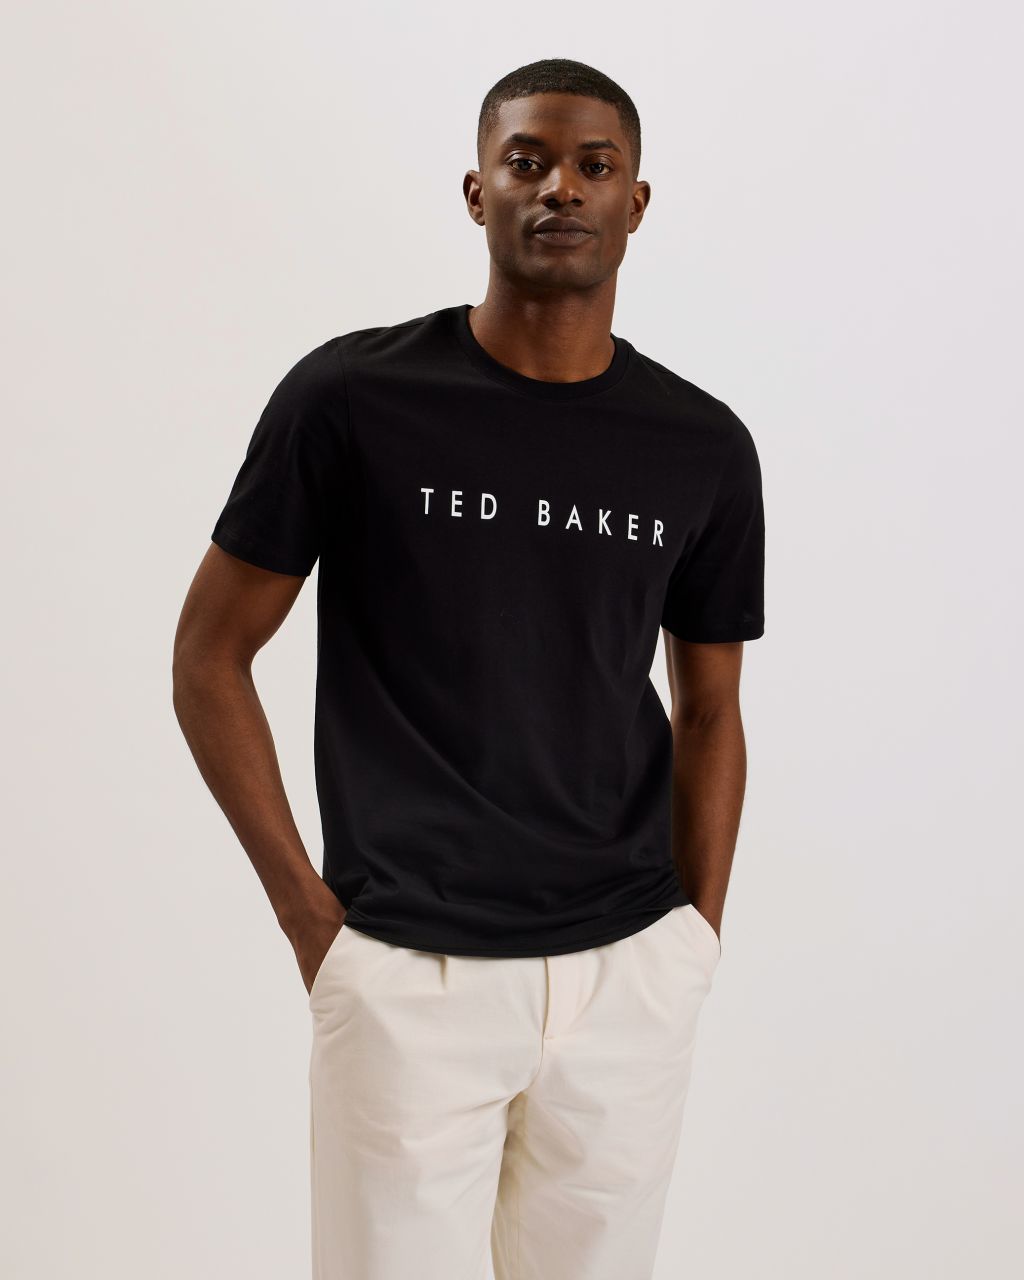 Ted Baker Men's SS Branded T-Shirt in Black, Broni, Cotton